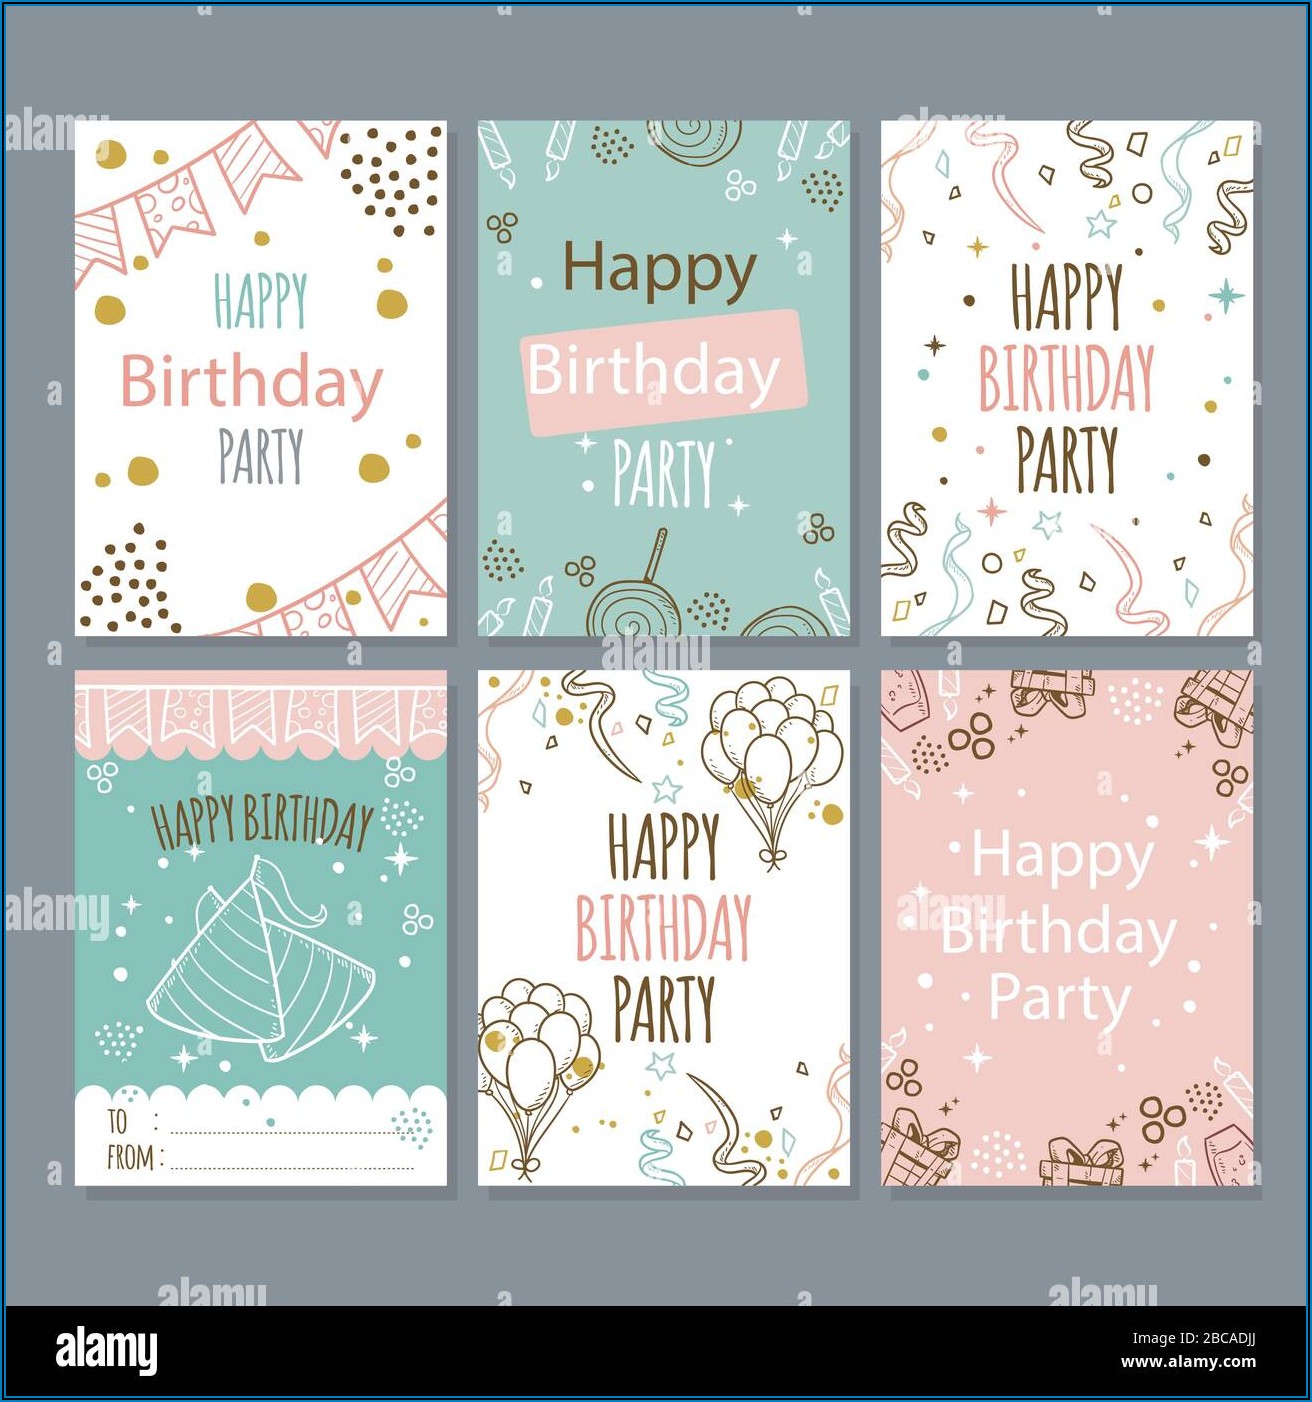 Happy Birthday Invitation Card Template